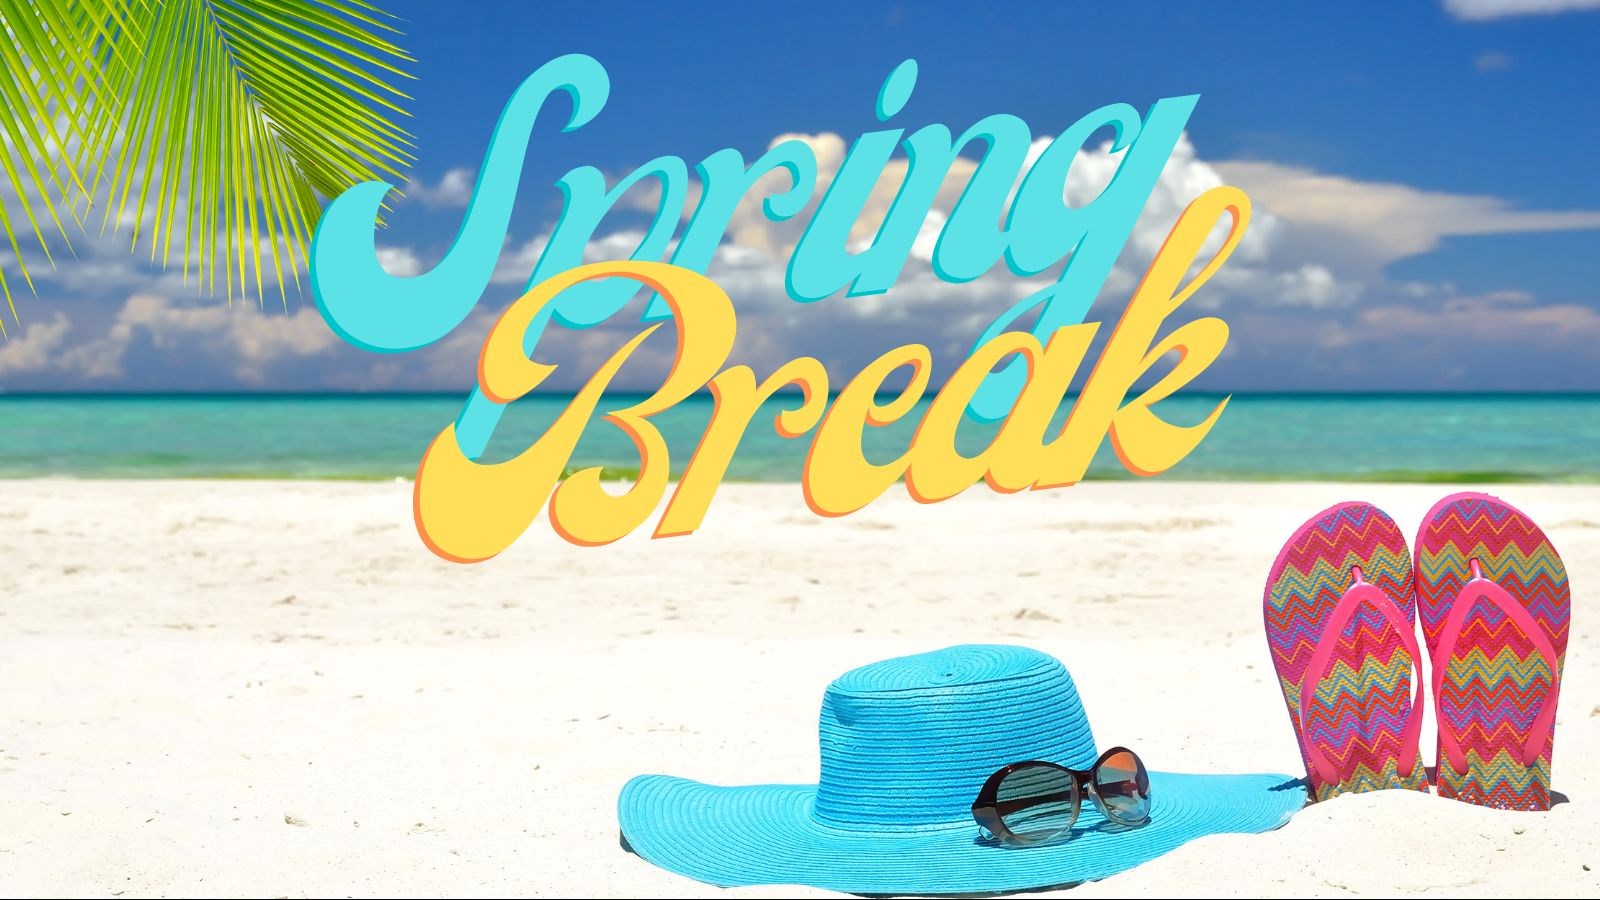 beach scene with flip flops and beach hat. Text reads Spring Break